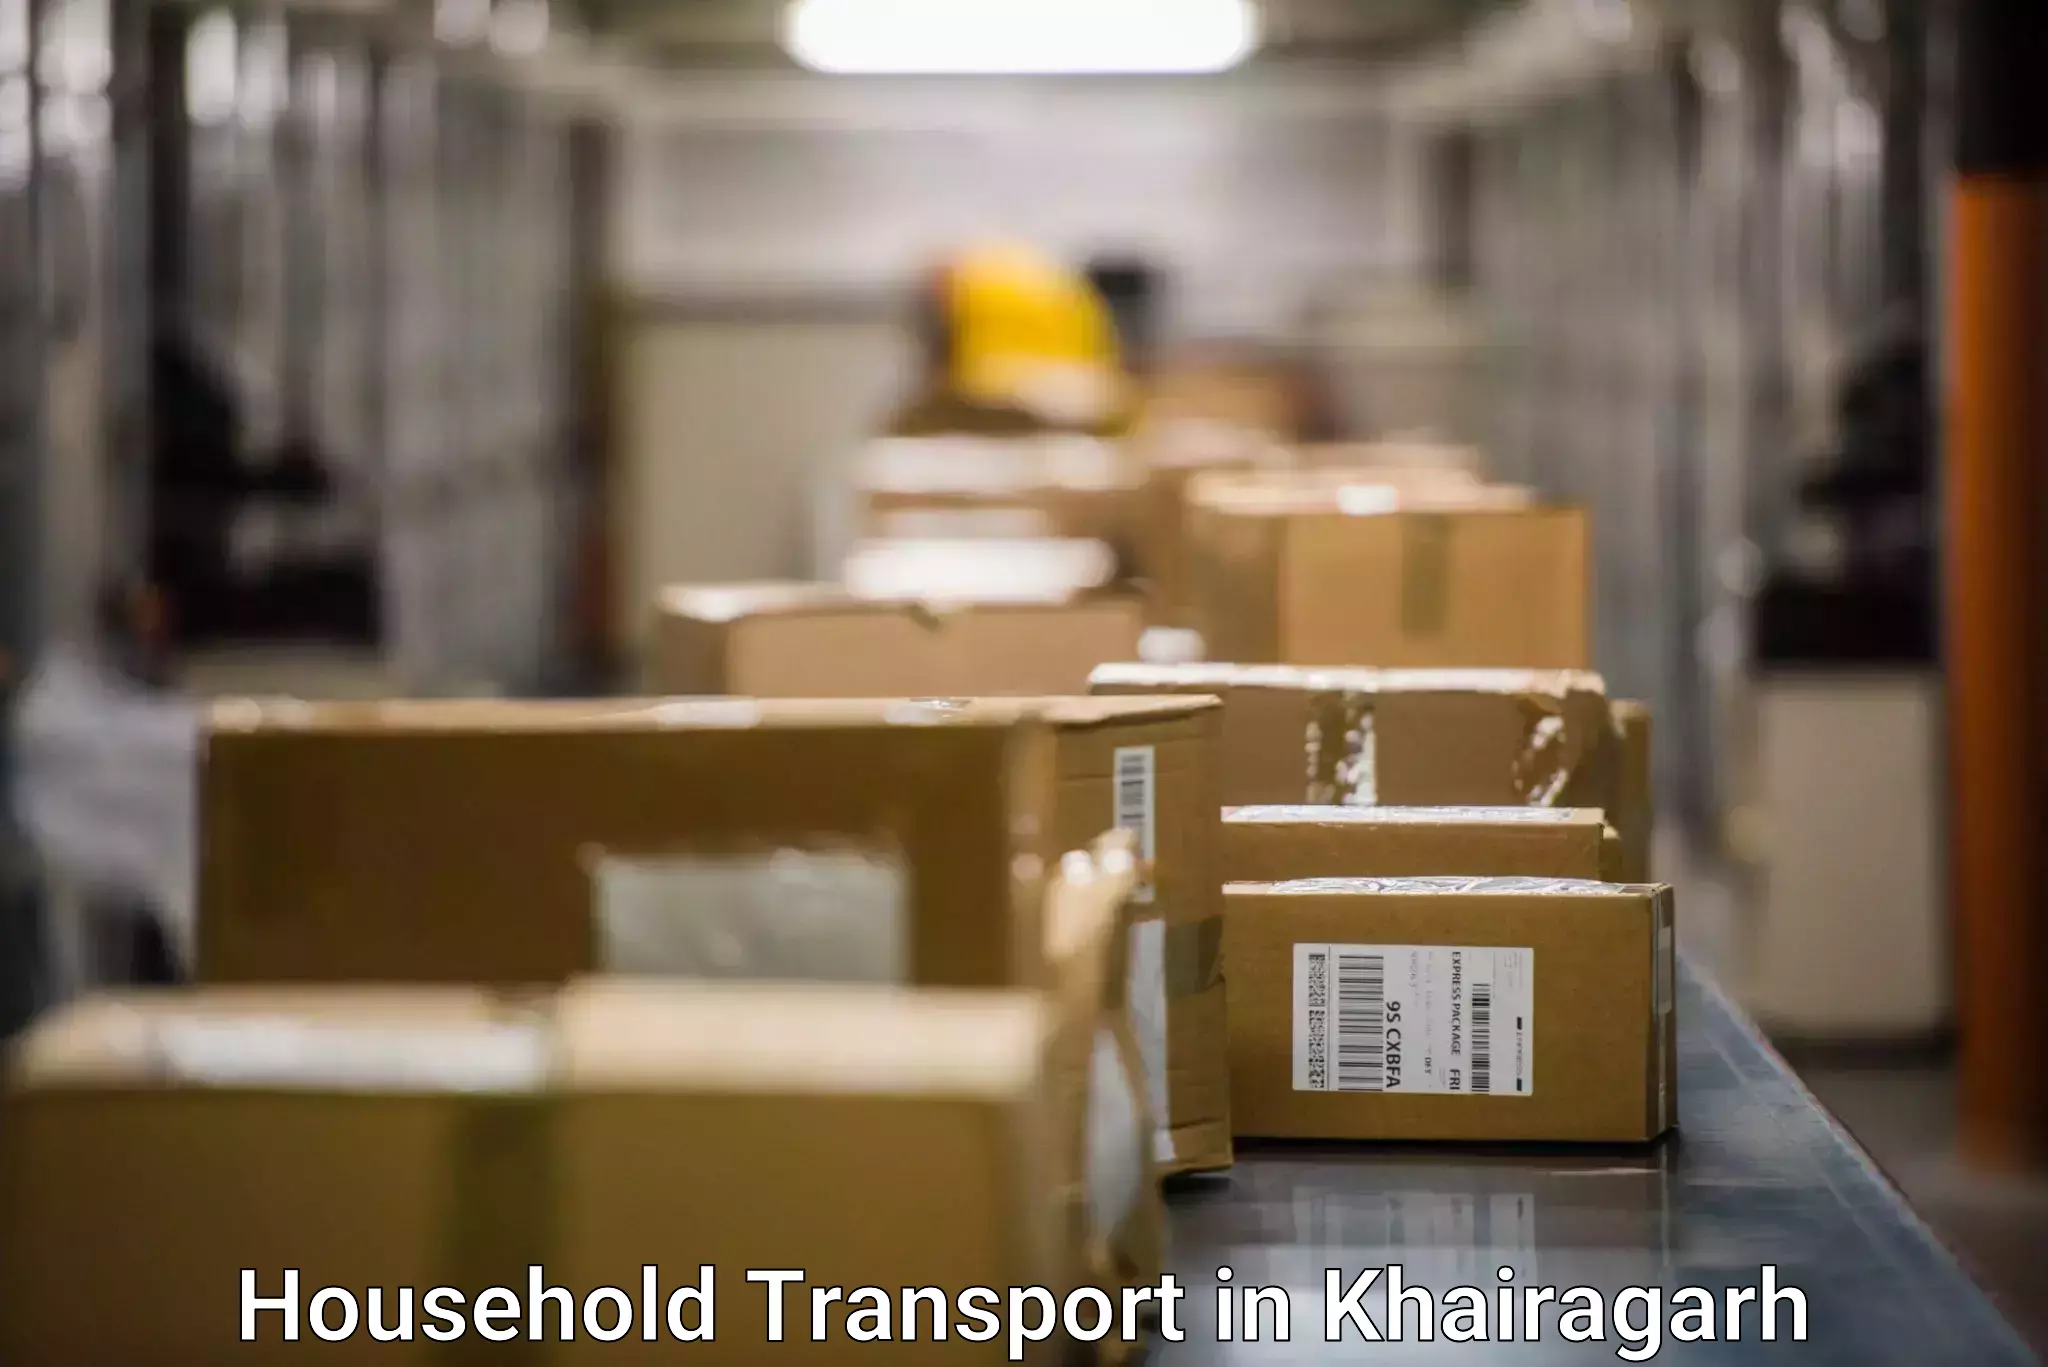 Household goods movers in Khairagarh